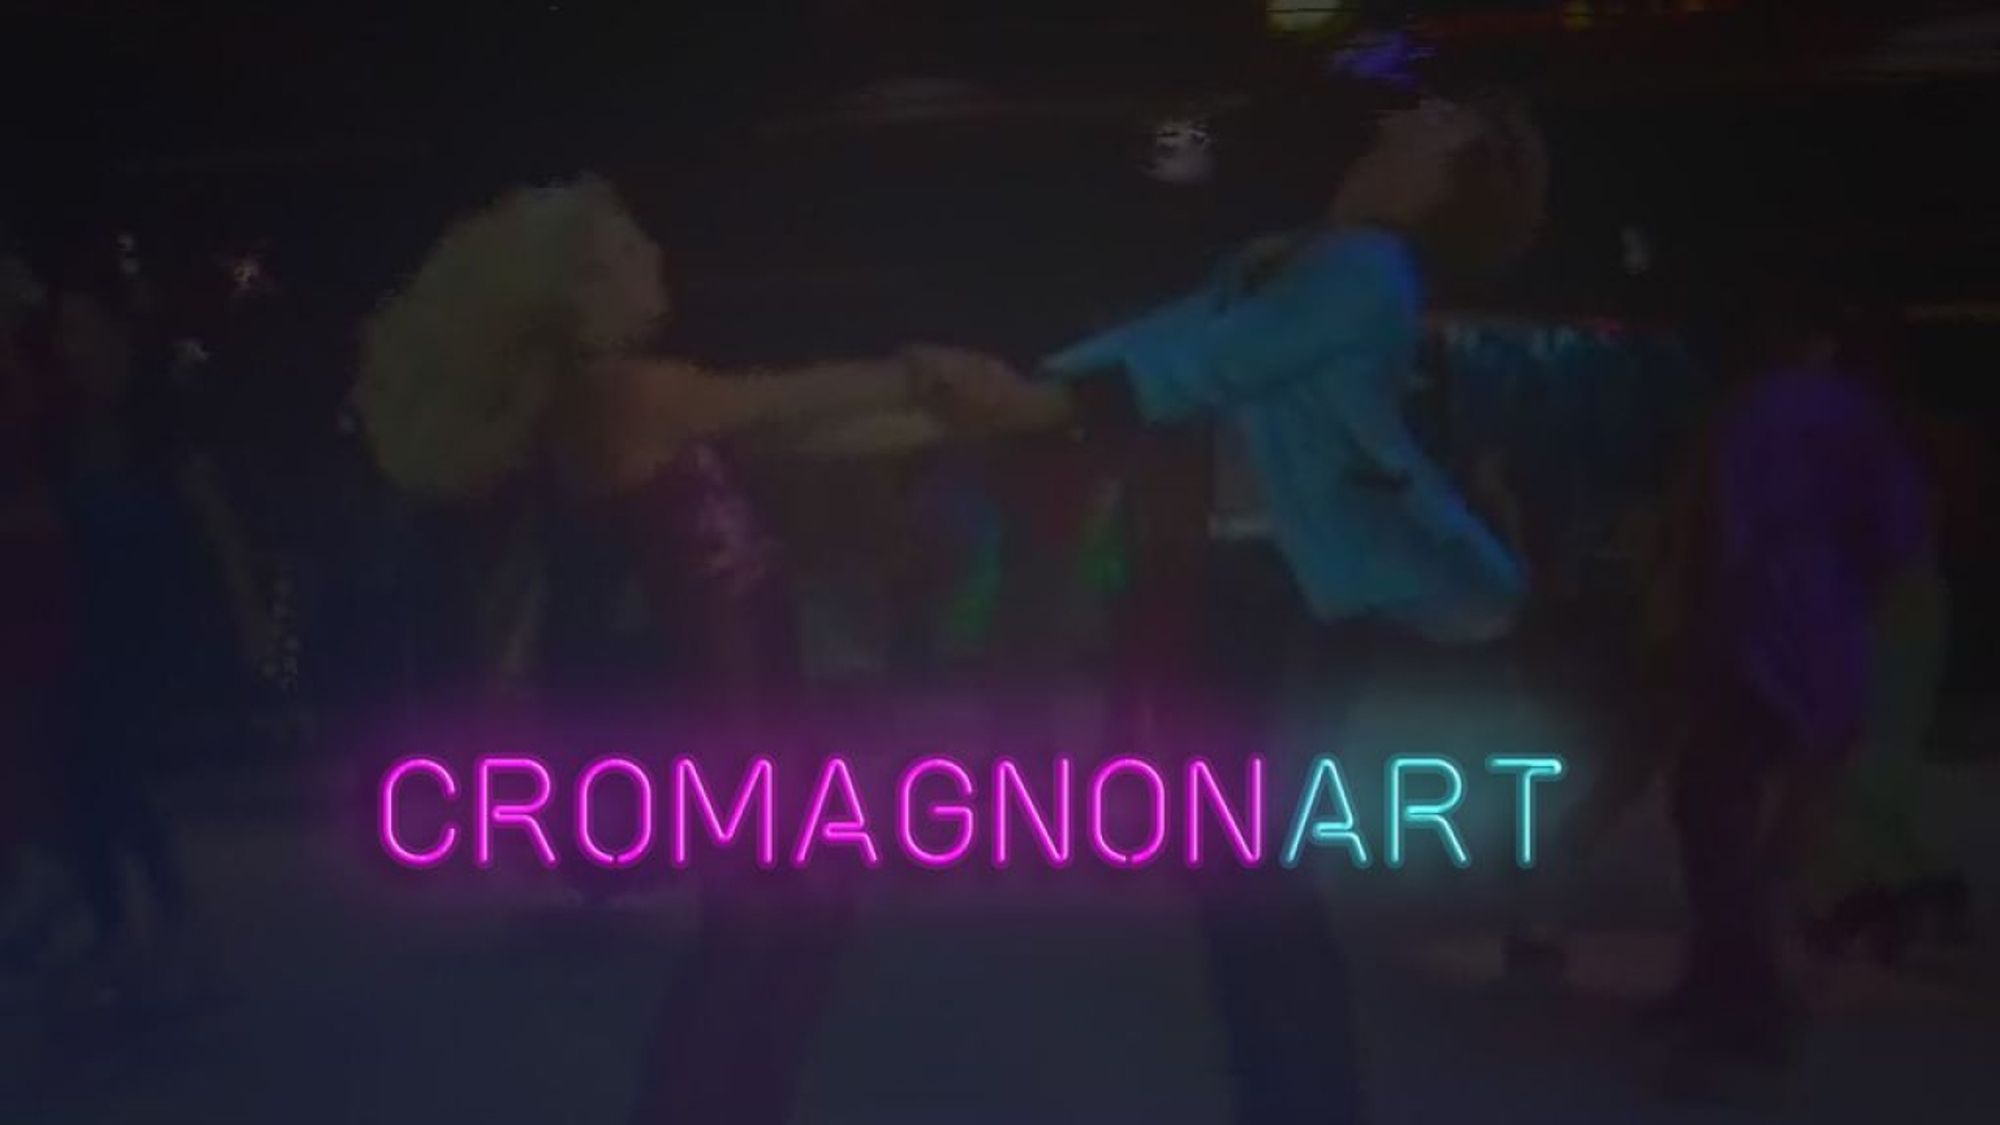 Cromagnon Art